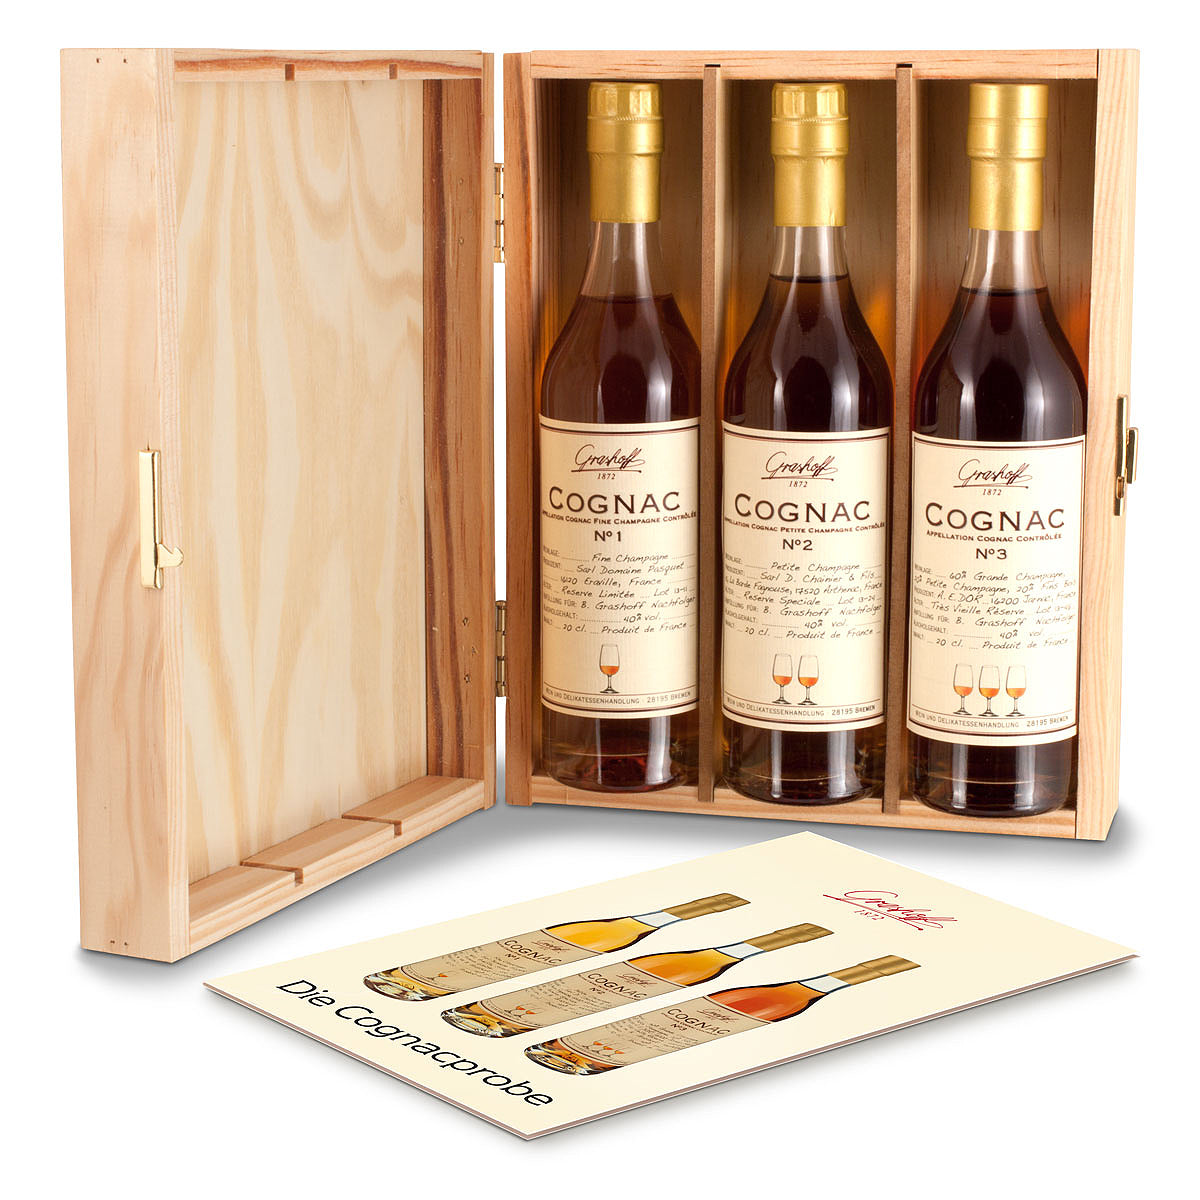 The cognac sample